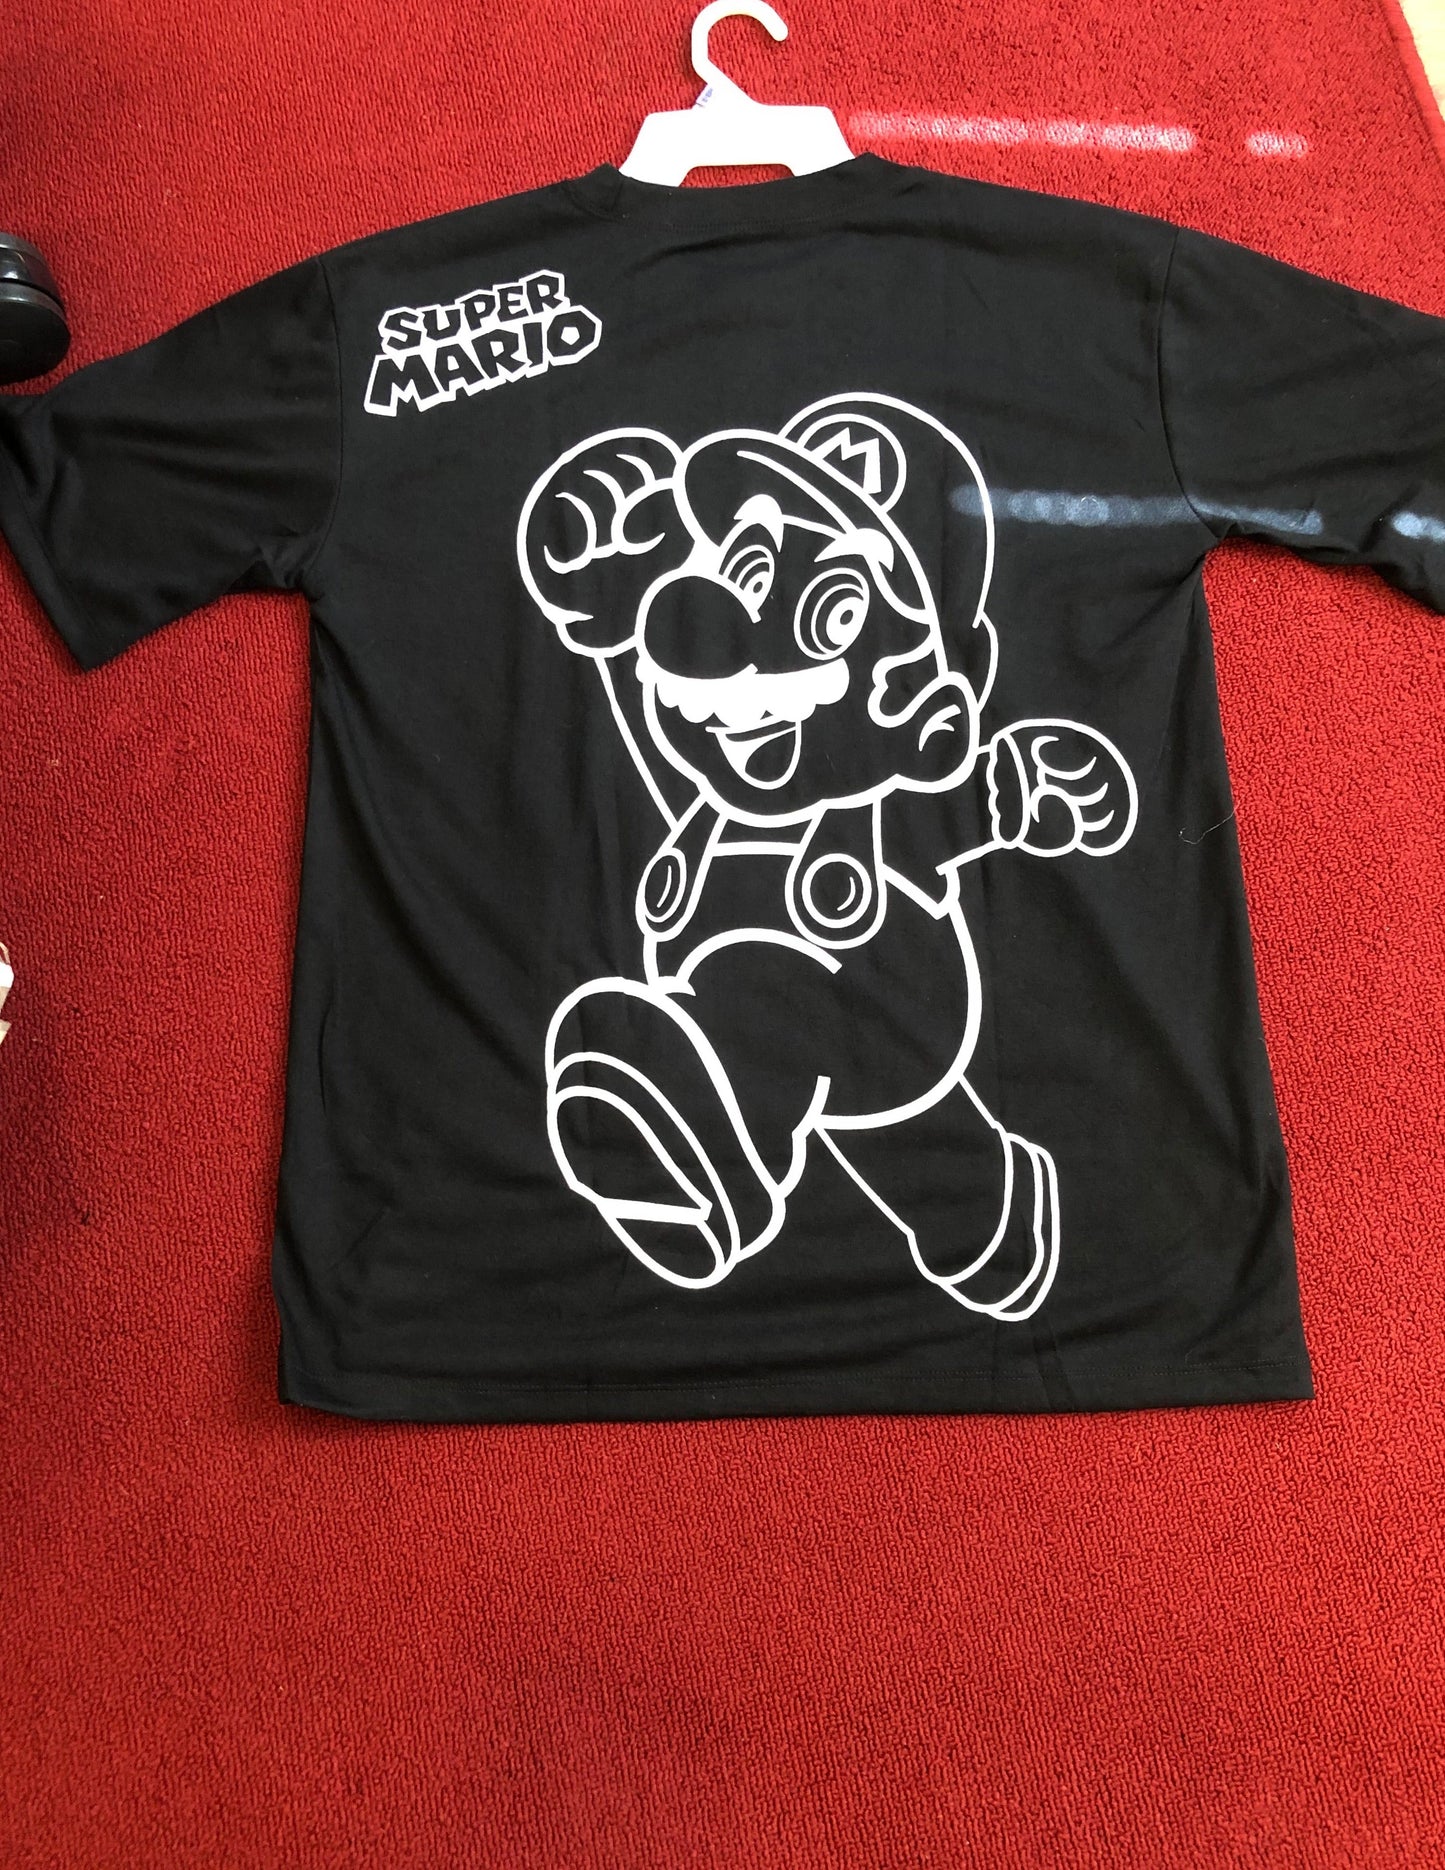 Men/Or Woman  Graphic Nintendo Super Mario T-Shirt Color Black Size L/XL  "New Arrival"